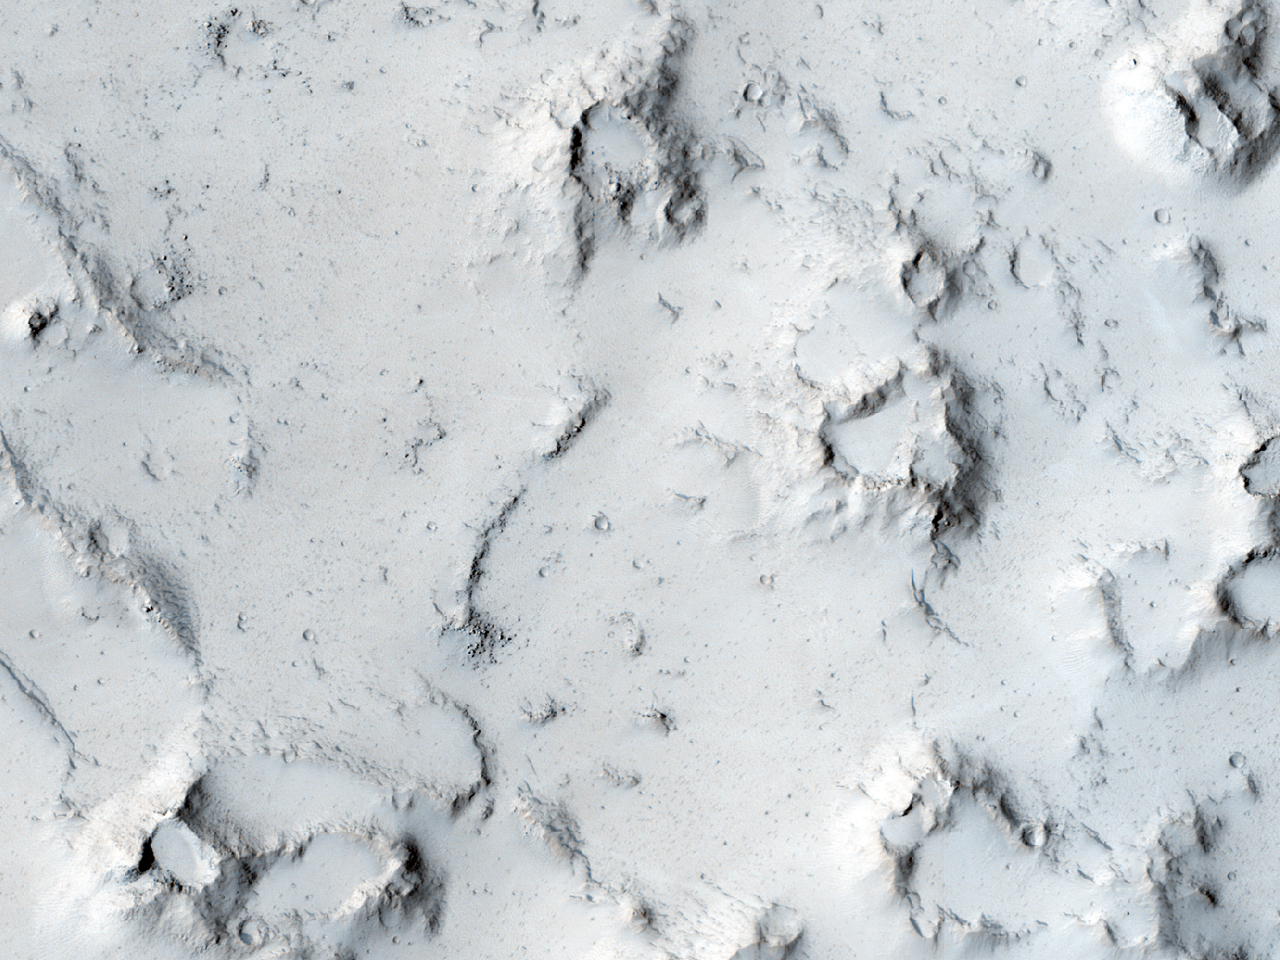 Koner med vallgravar i Elysium Planitia